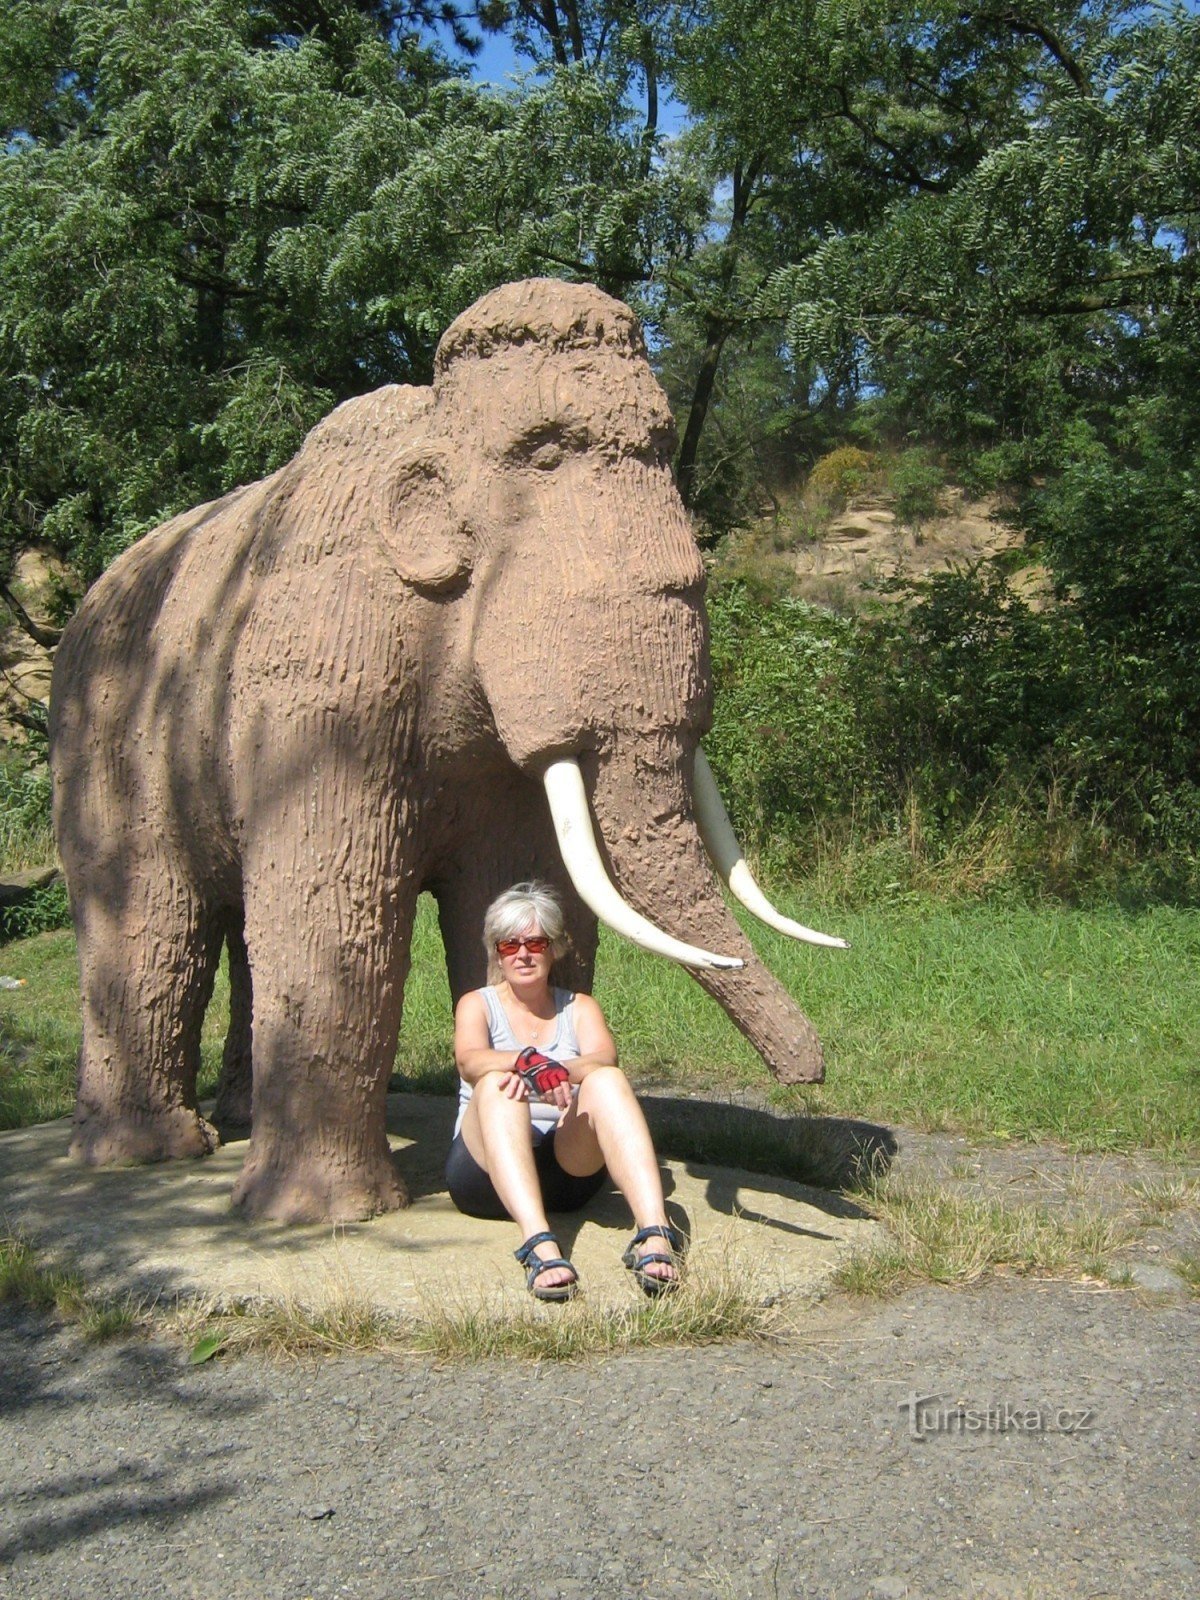 Rzeźba mamuta w Čekyňským kopč